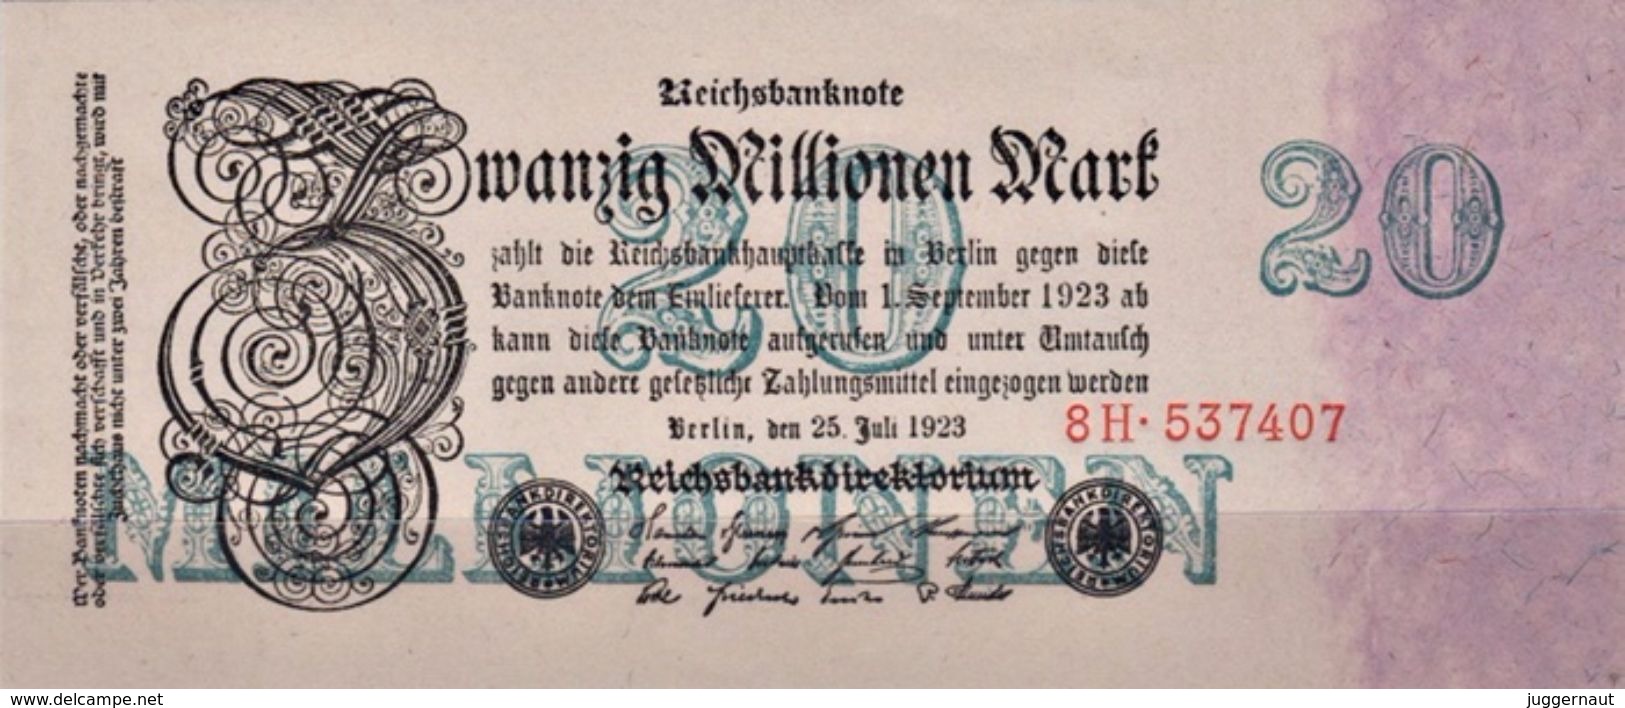 GERMANY 20 MILLIONEN MARK REICHSBANKNOTE 1923 AD PICK NO.97 UNCIRCULATED UNC - 20 Millionen Mark